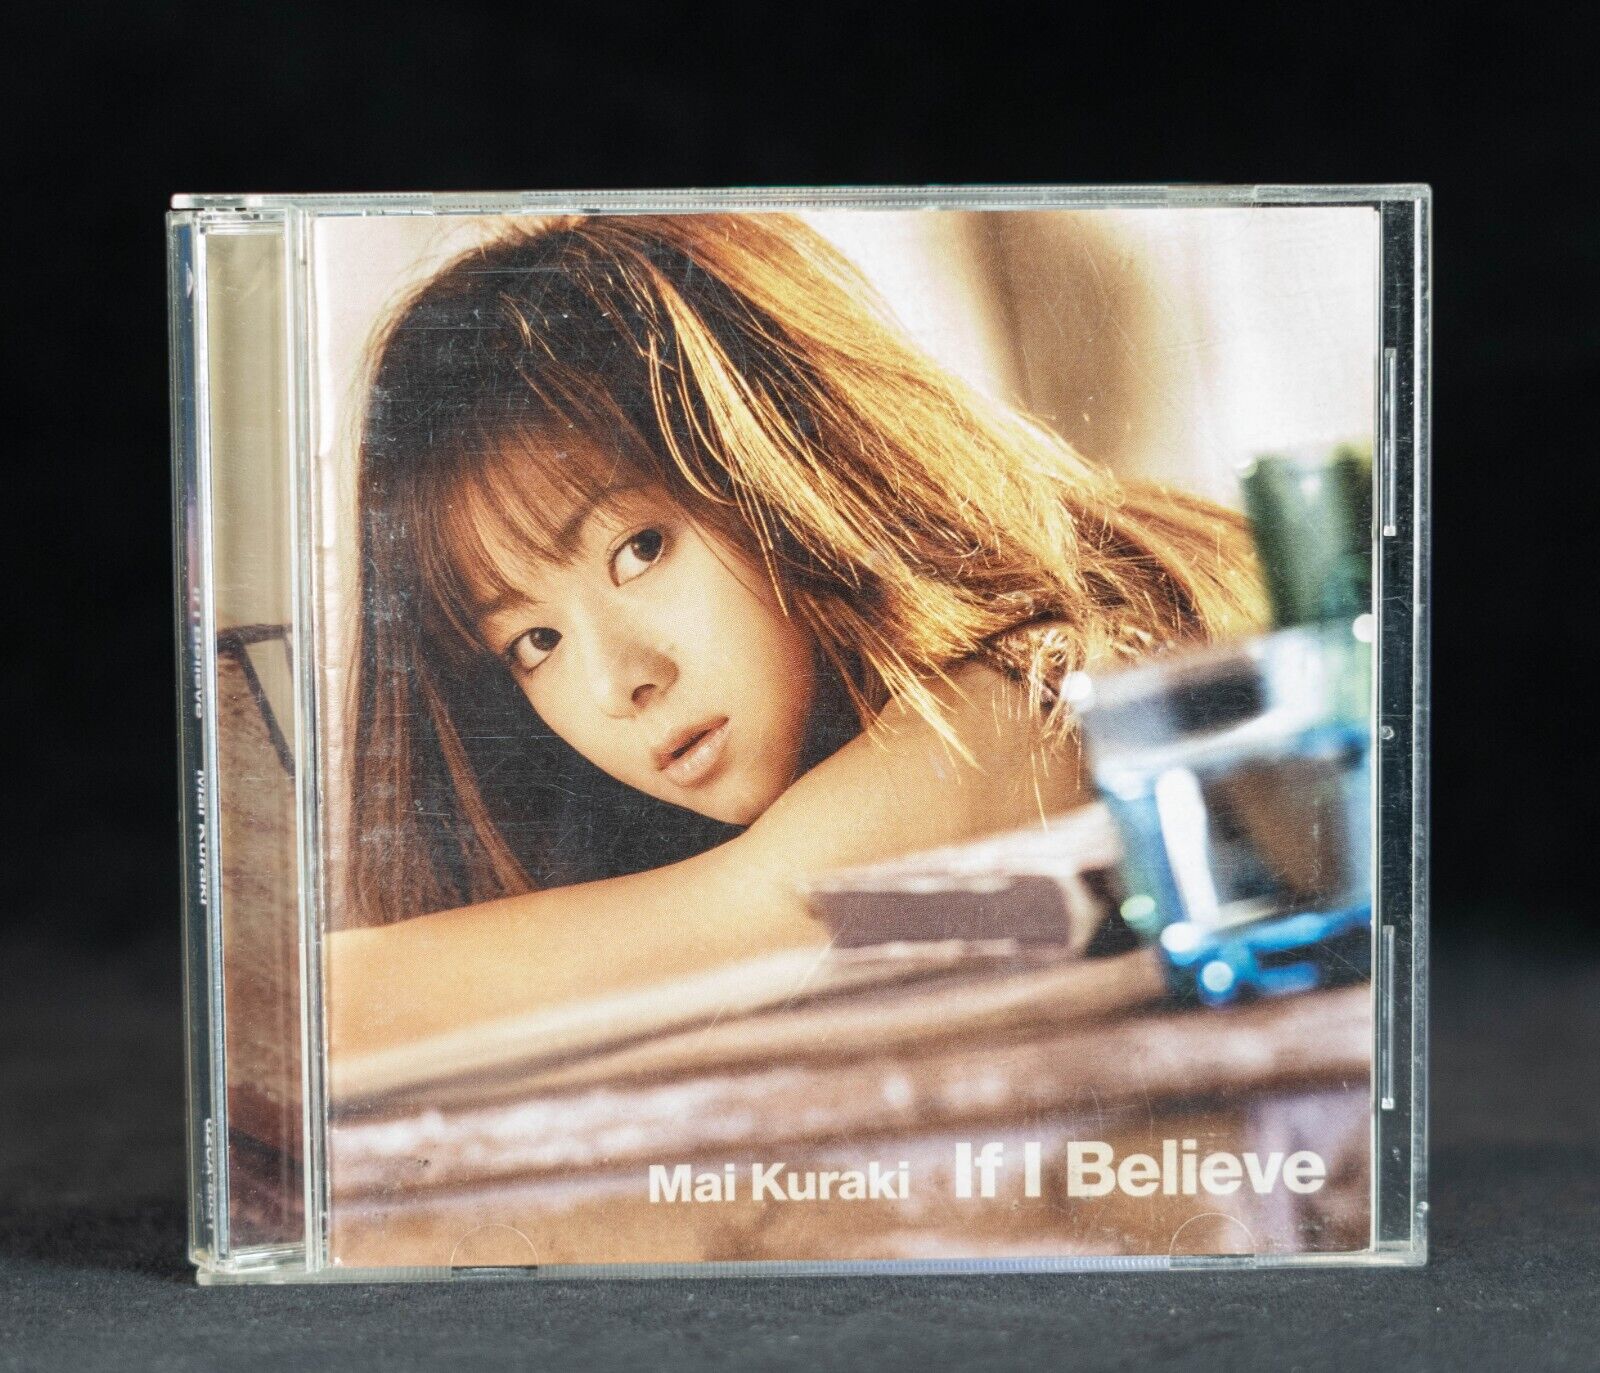 MAI KURAKI IF I BELIEVE Japan CD - GZCA-5031 US SELLER